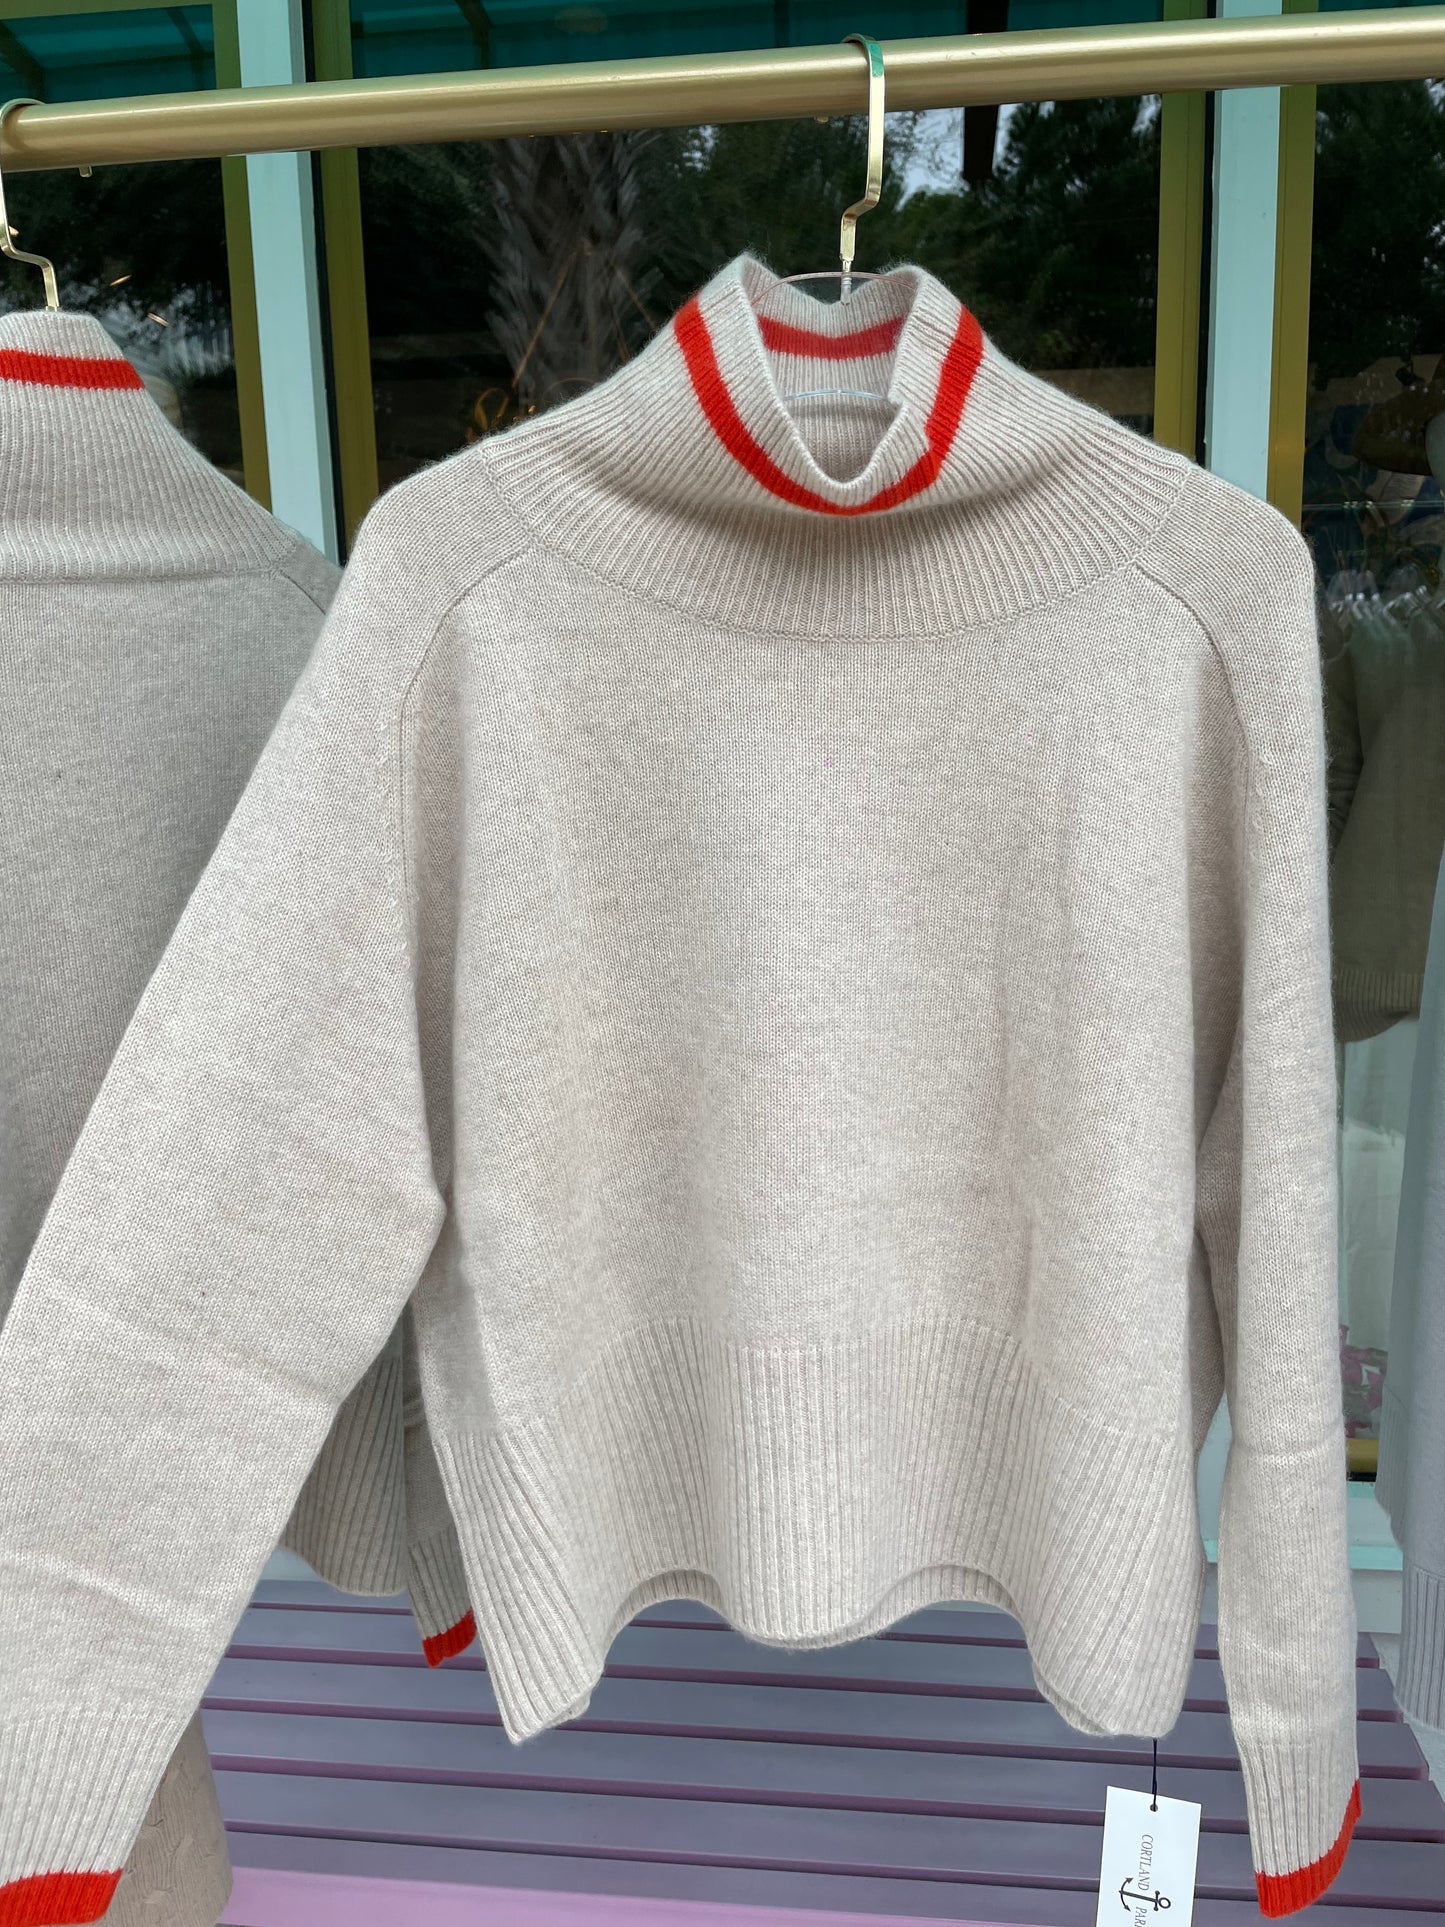 Hamilton Sweater